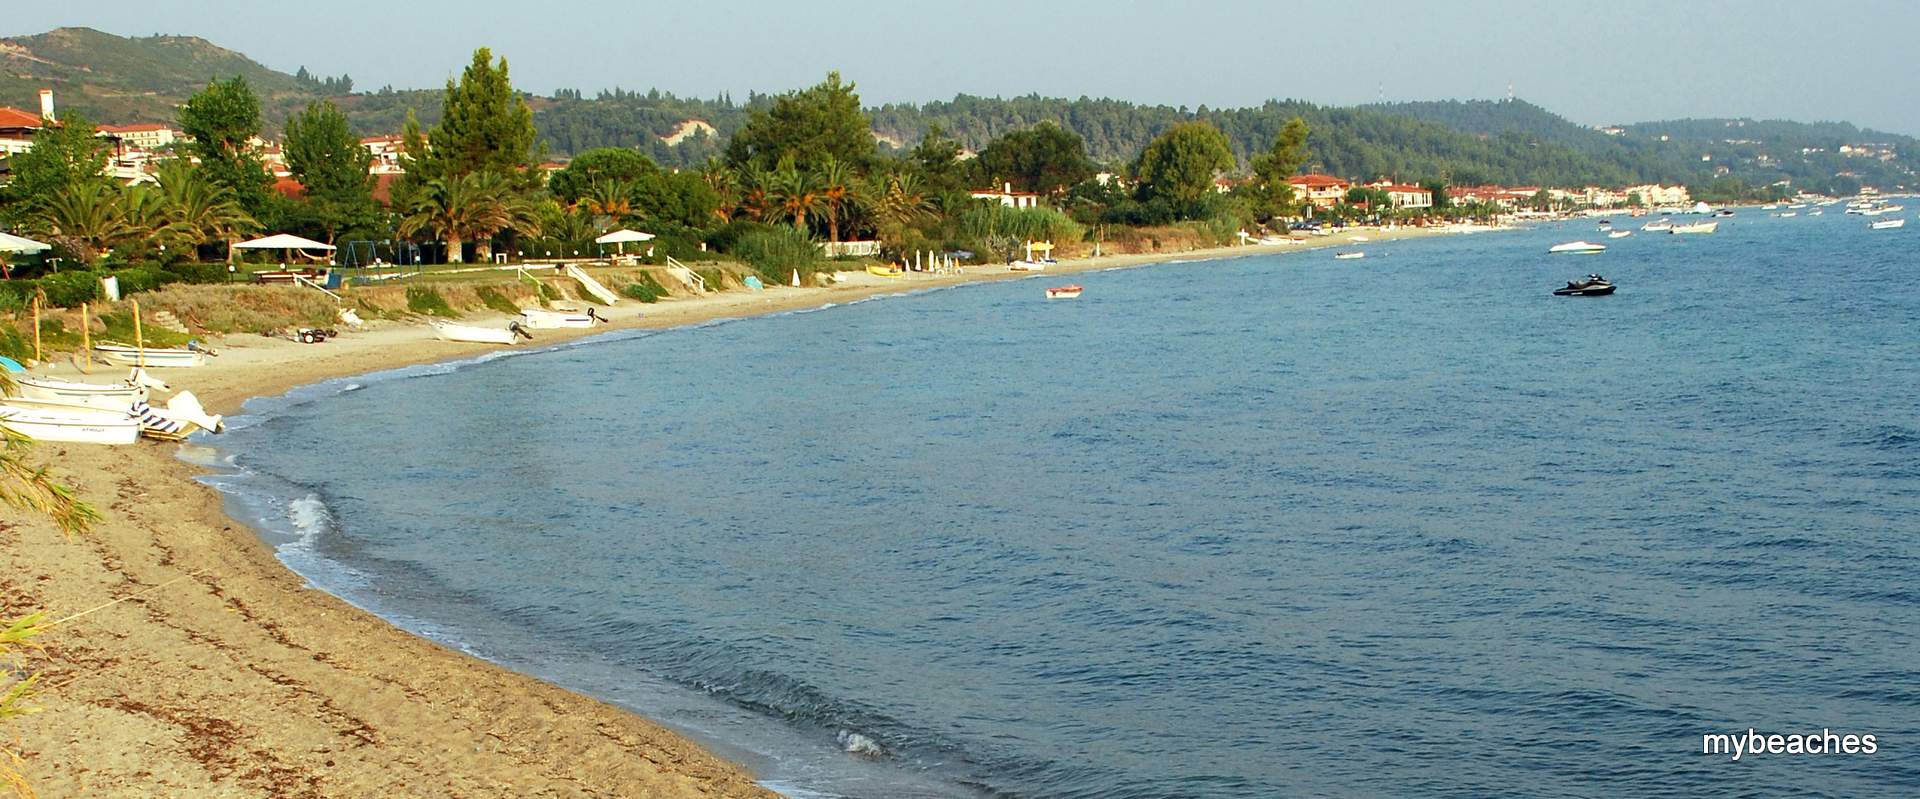 Ligaries beach, Kassandra, Halkidiki, Greece